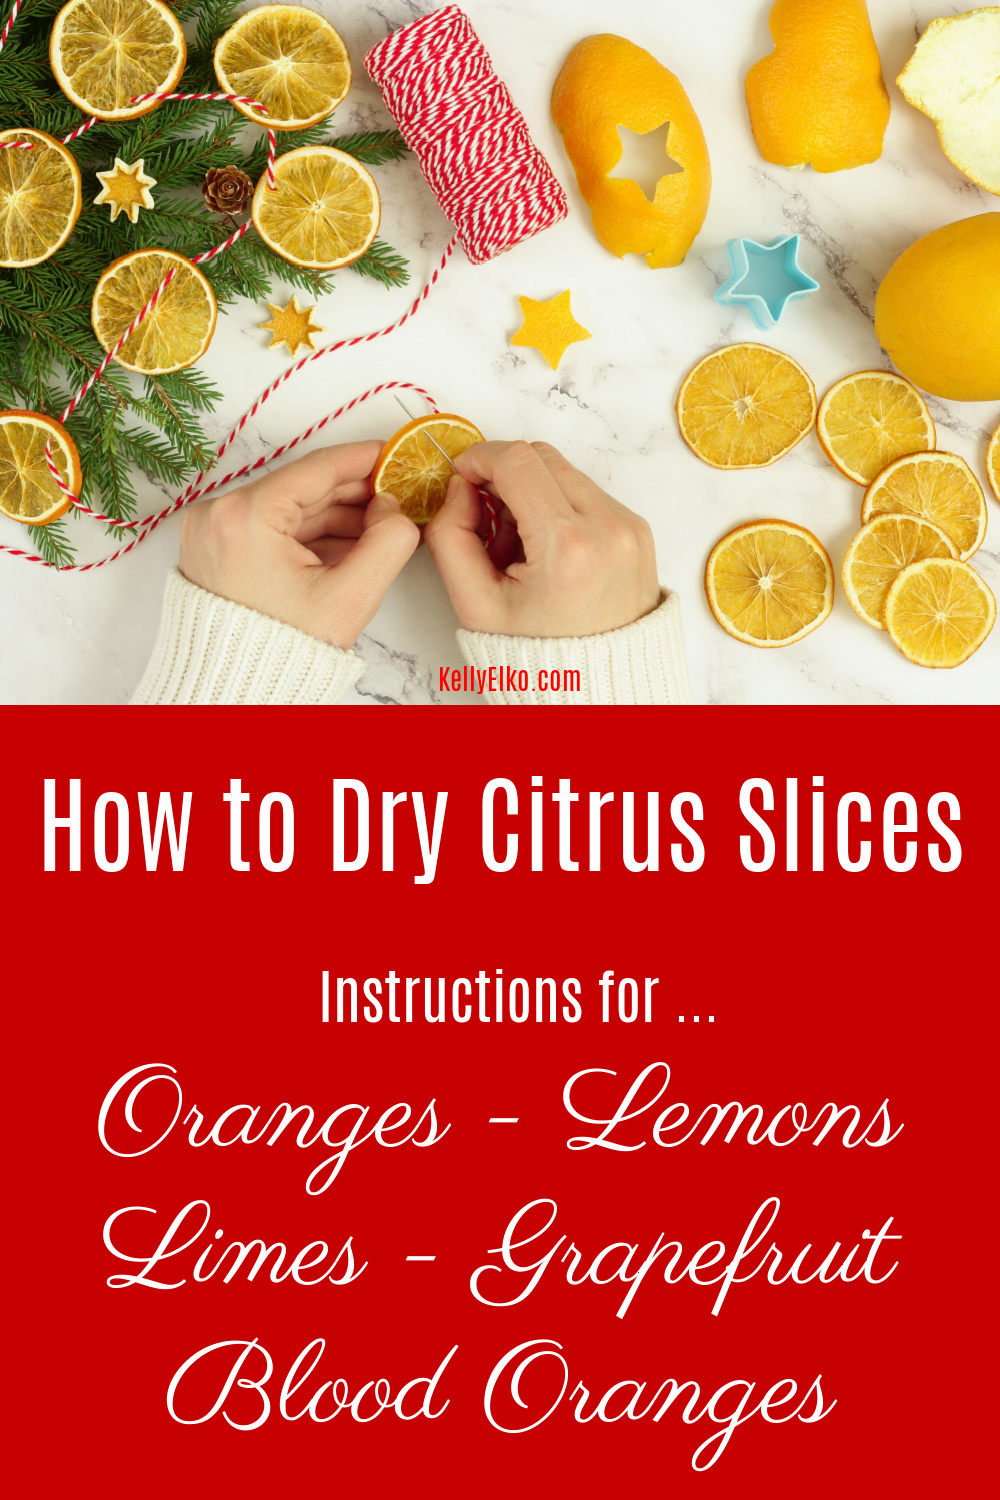 How to Dry Citrus Slices kellyelko.com #citrus #diychristmas #diychristmasornaments #christmascrafts #fallcrafts #naturalchristamsdecor #orangeslices